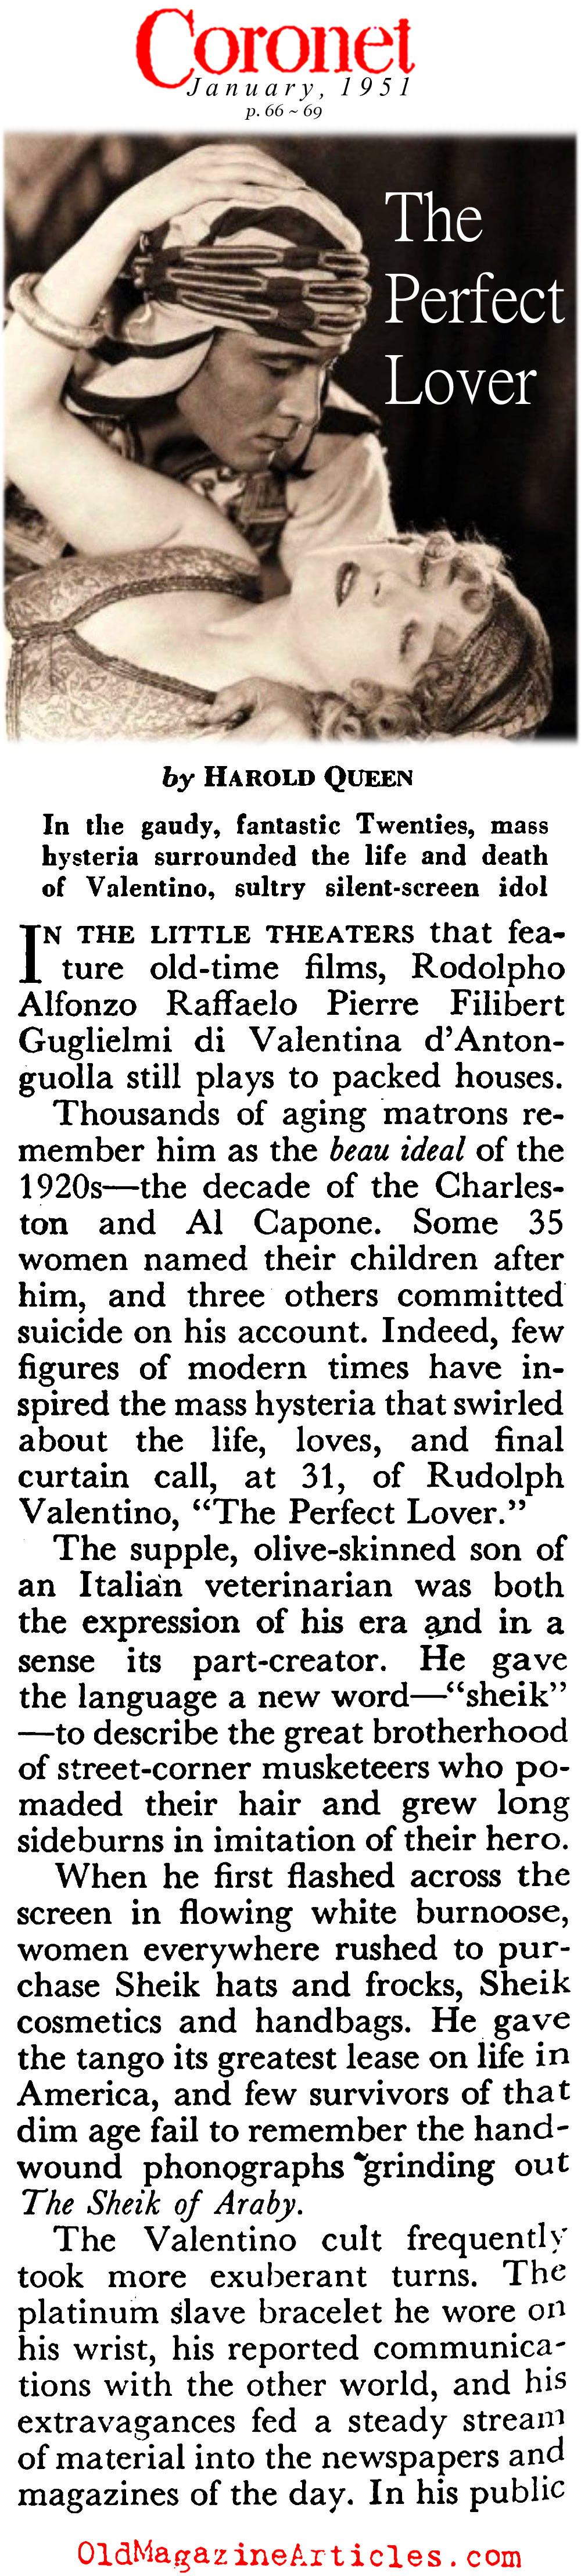 The Frenzy for Rudolph Valentino (Coronet Magazine, 1951)